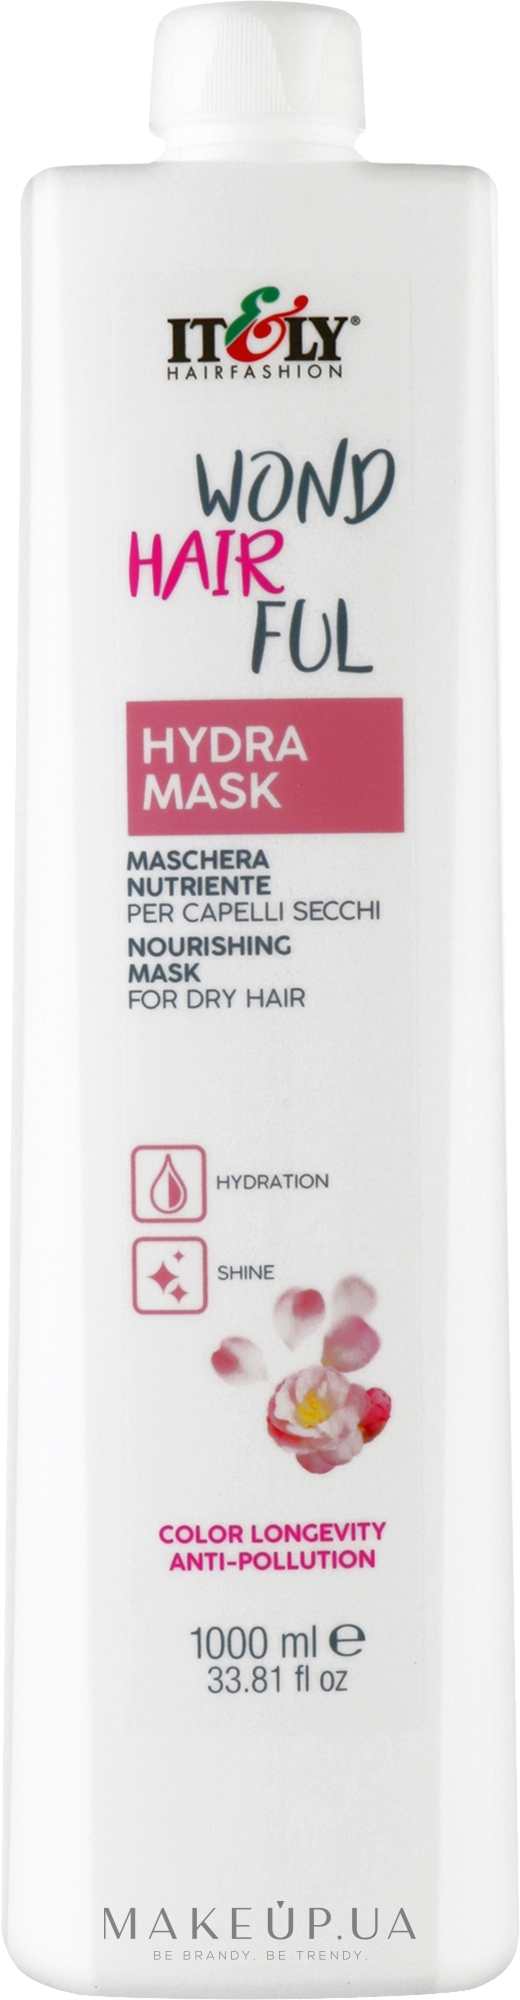 Питательная маска для волос - Itely Hairfashion WondHairFul Hydra Mask — фото 1000ml